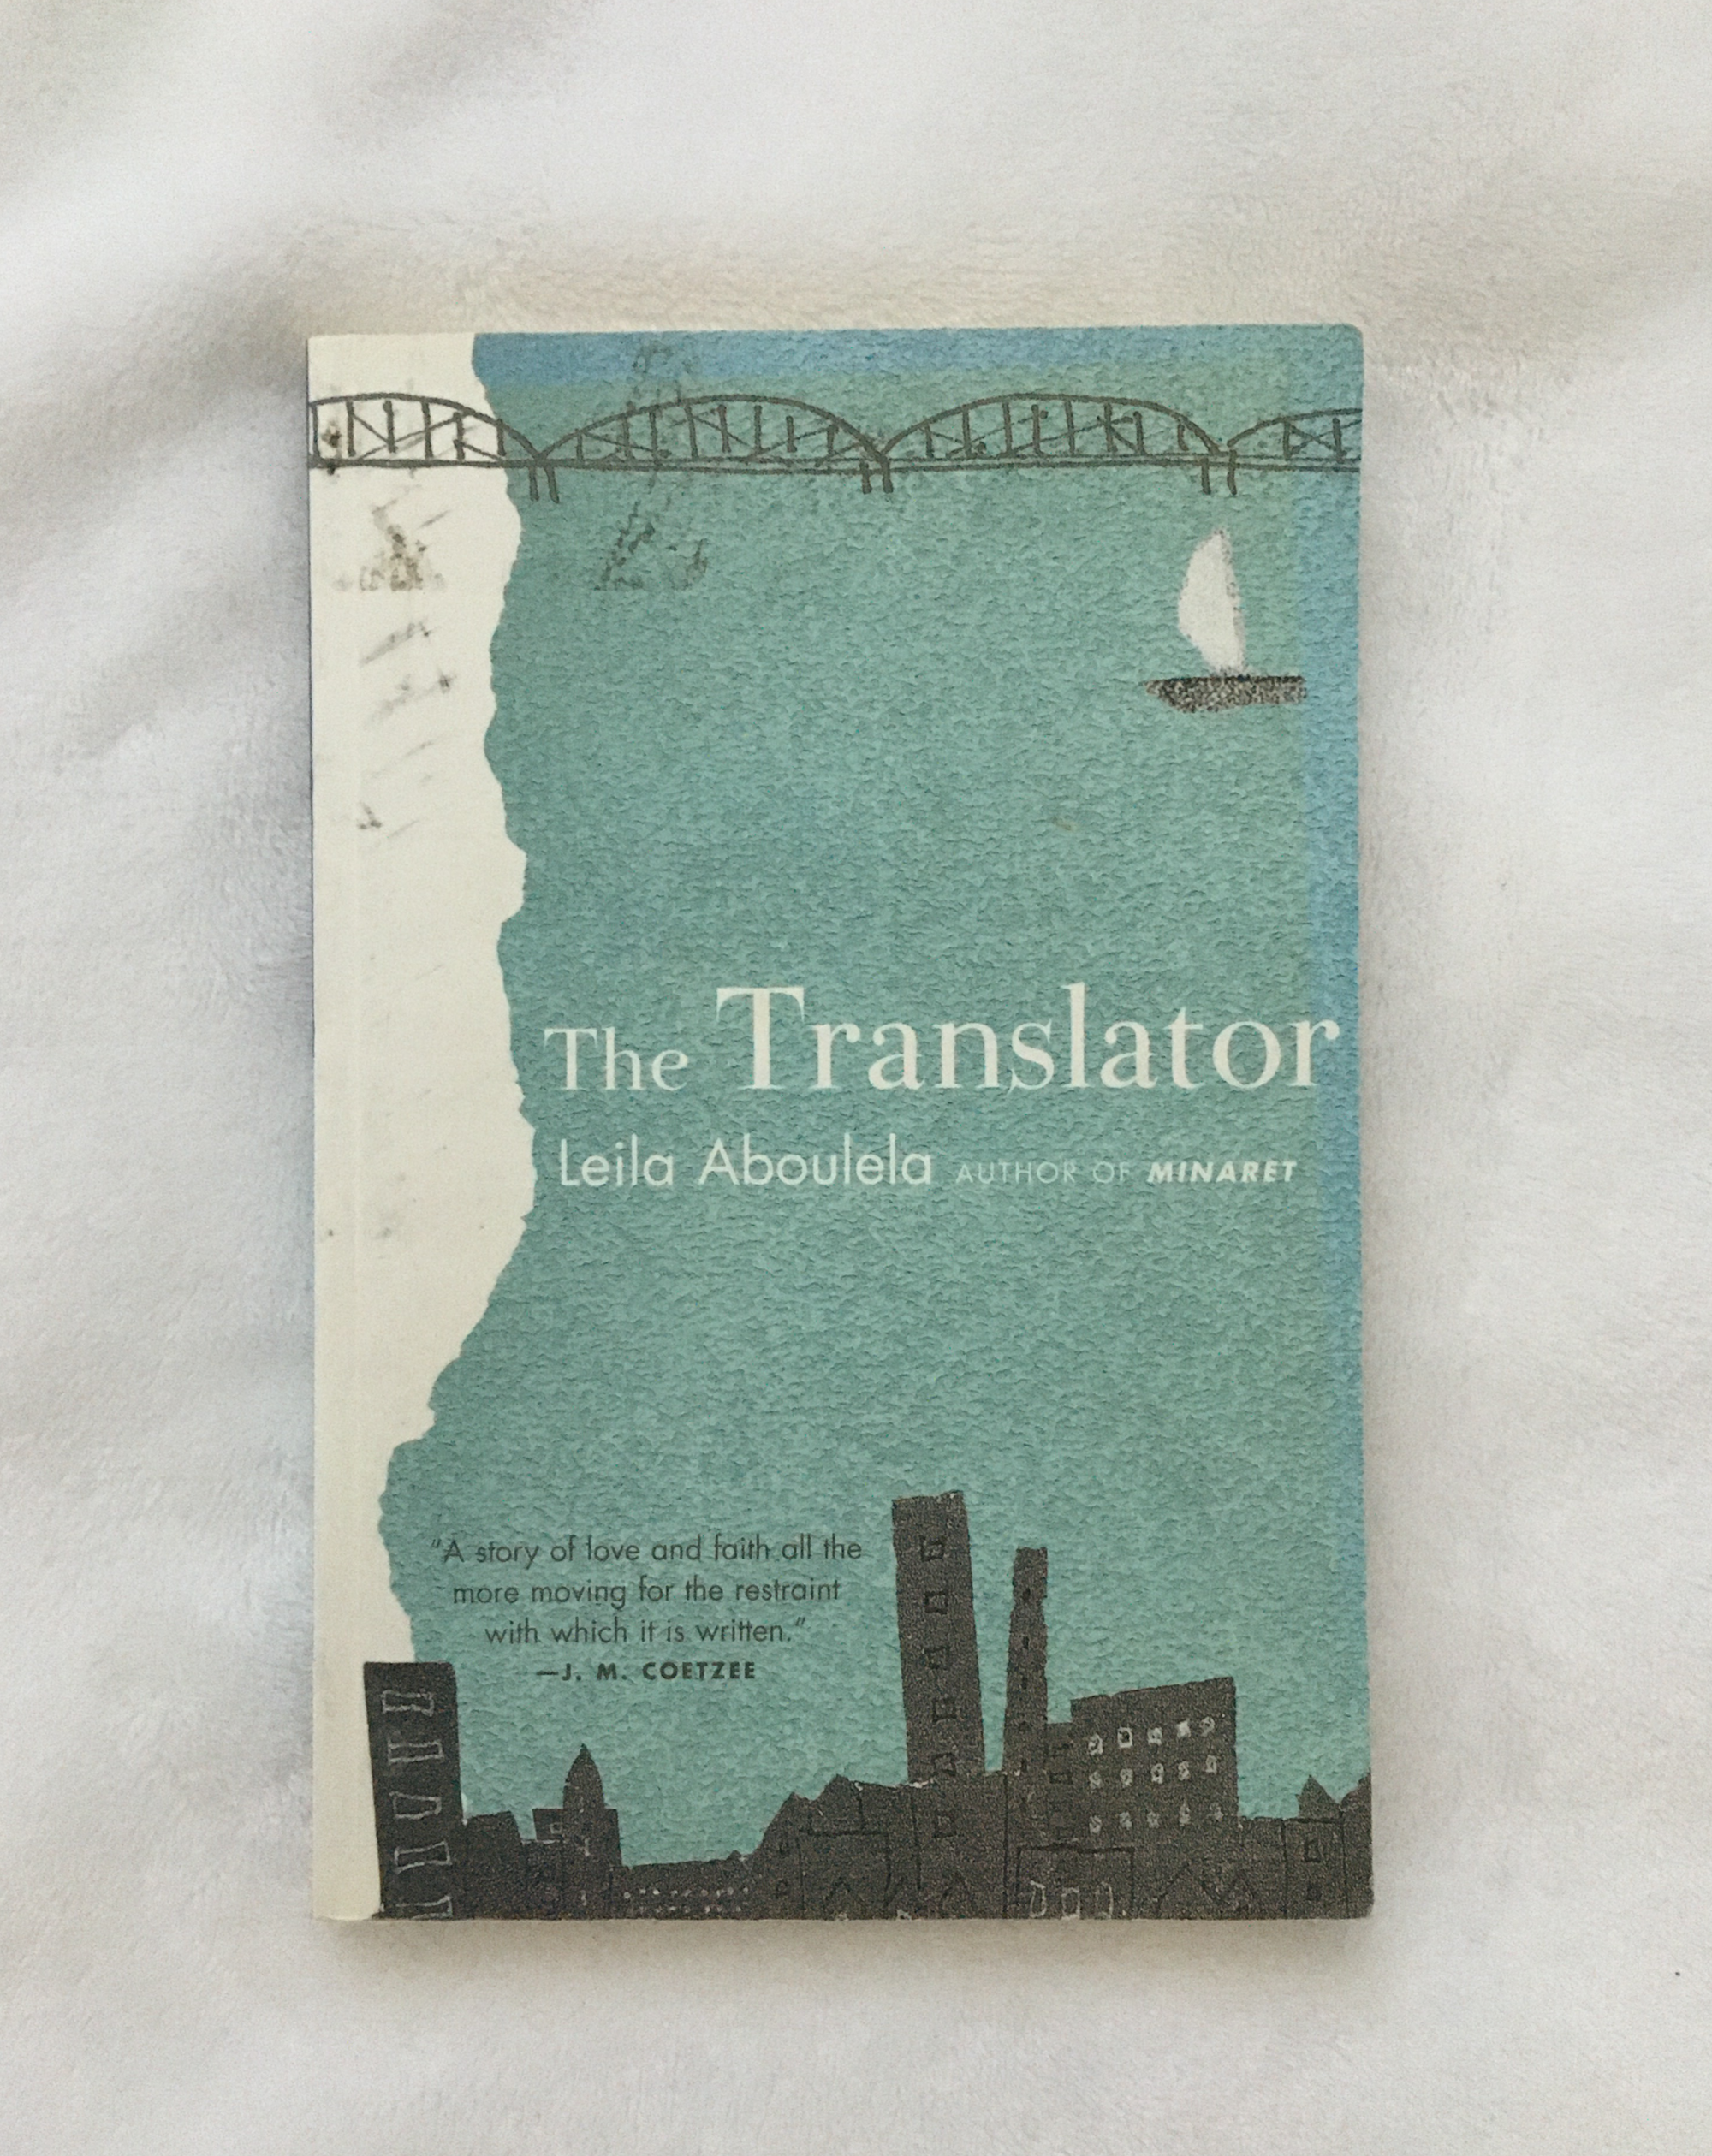 The Translator by Leila Aboulela, book, Ten Dollar Books, Ten Dollar Books